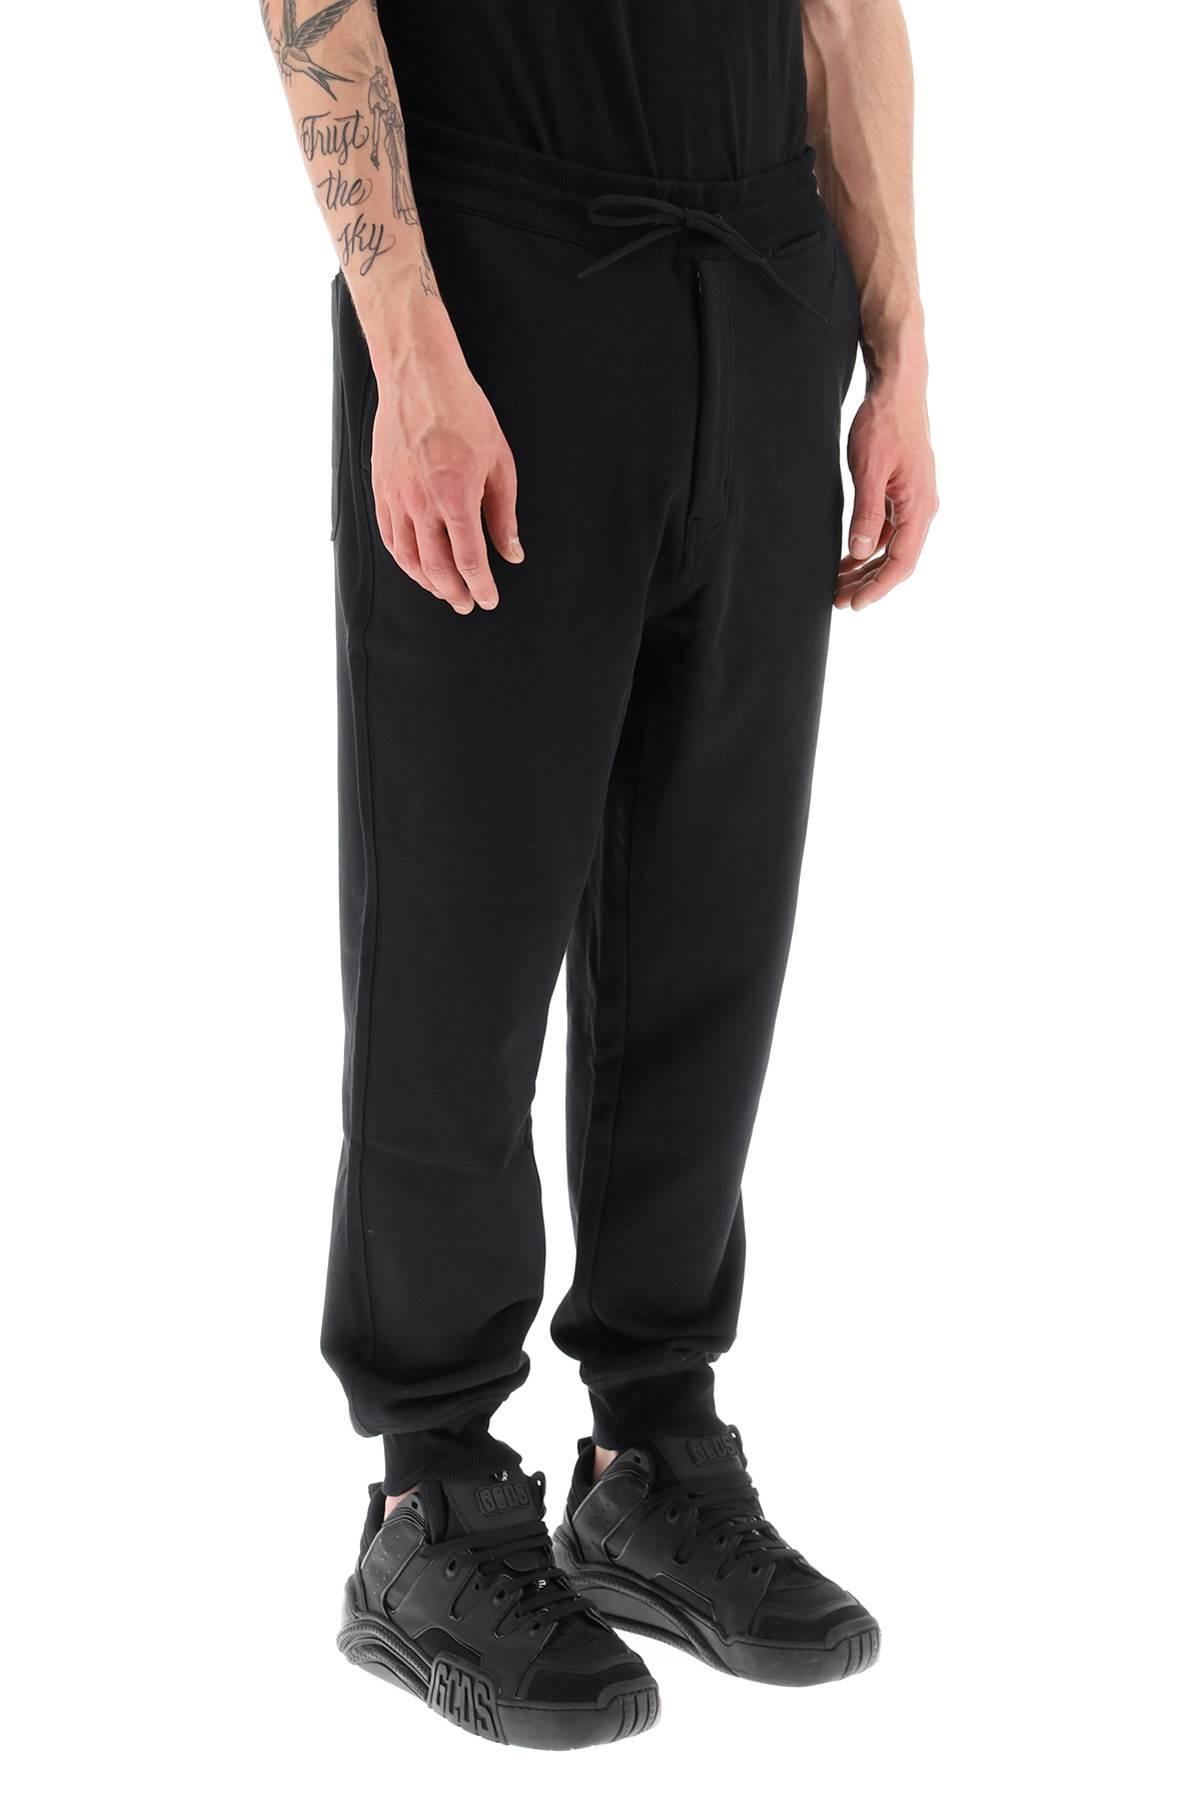 Y-3 Organic Cotton Sweatpants in Black for Men | Lyst